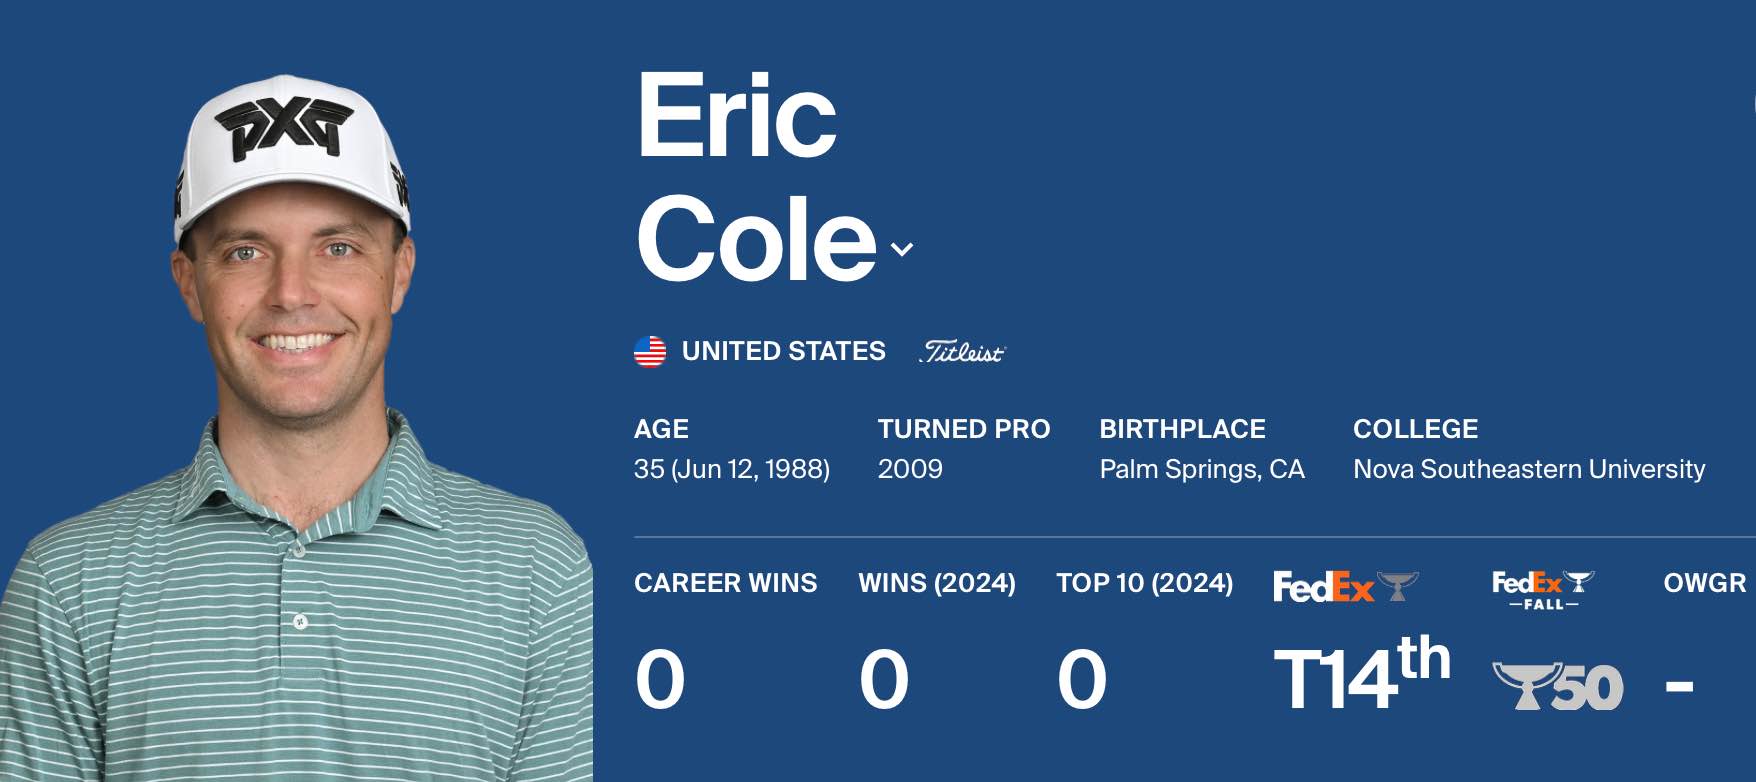 PGA TOUR player Eric Cole